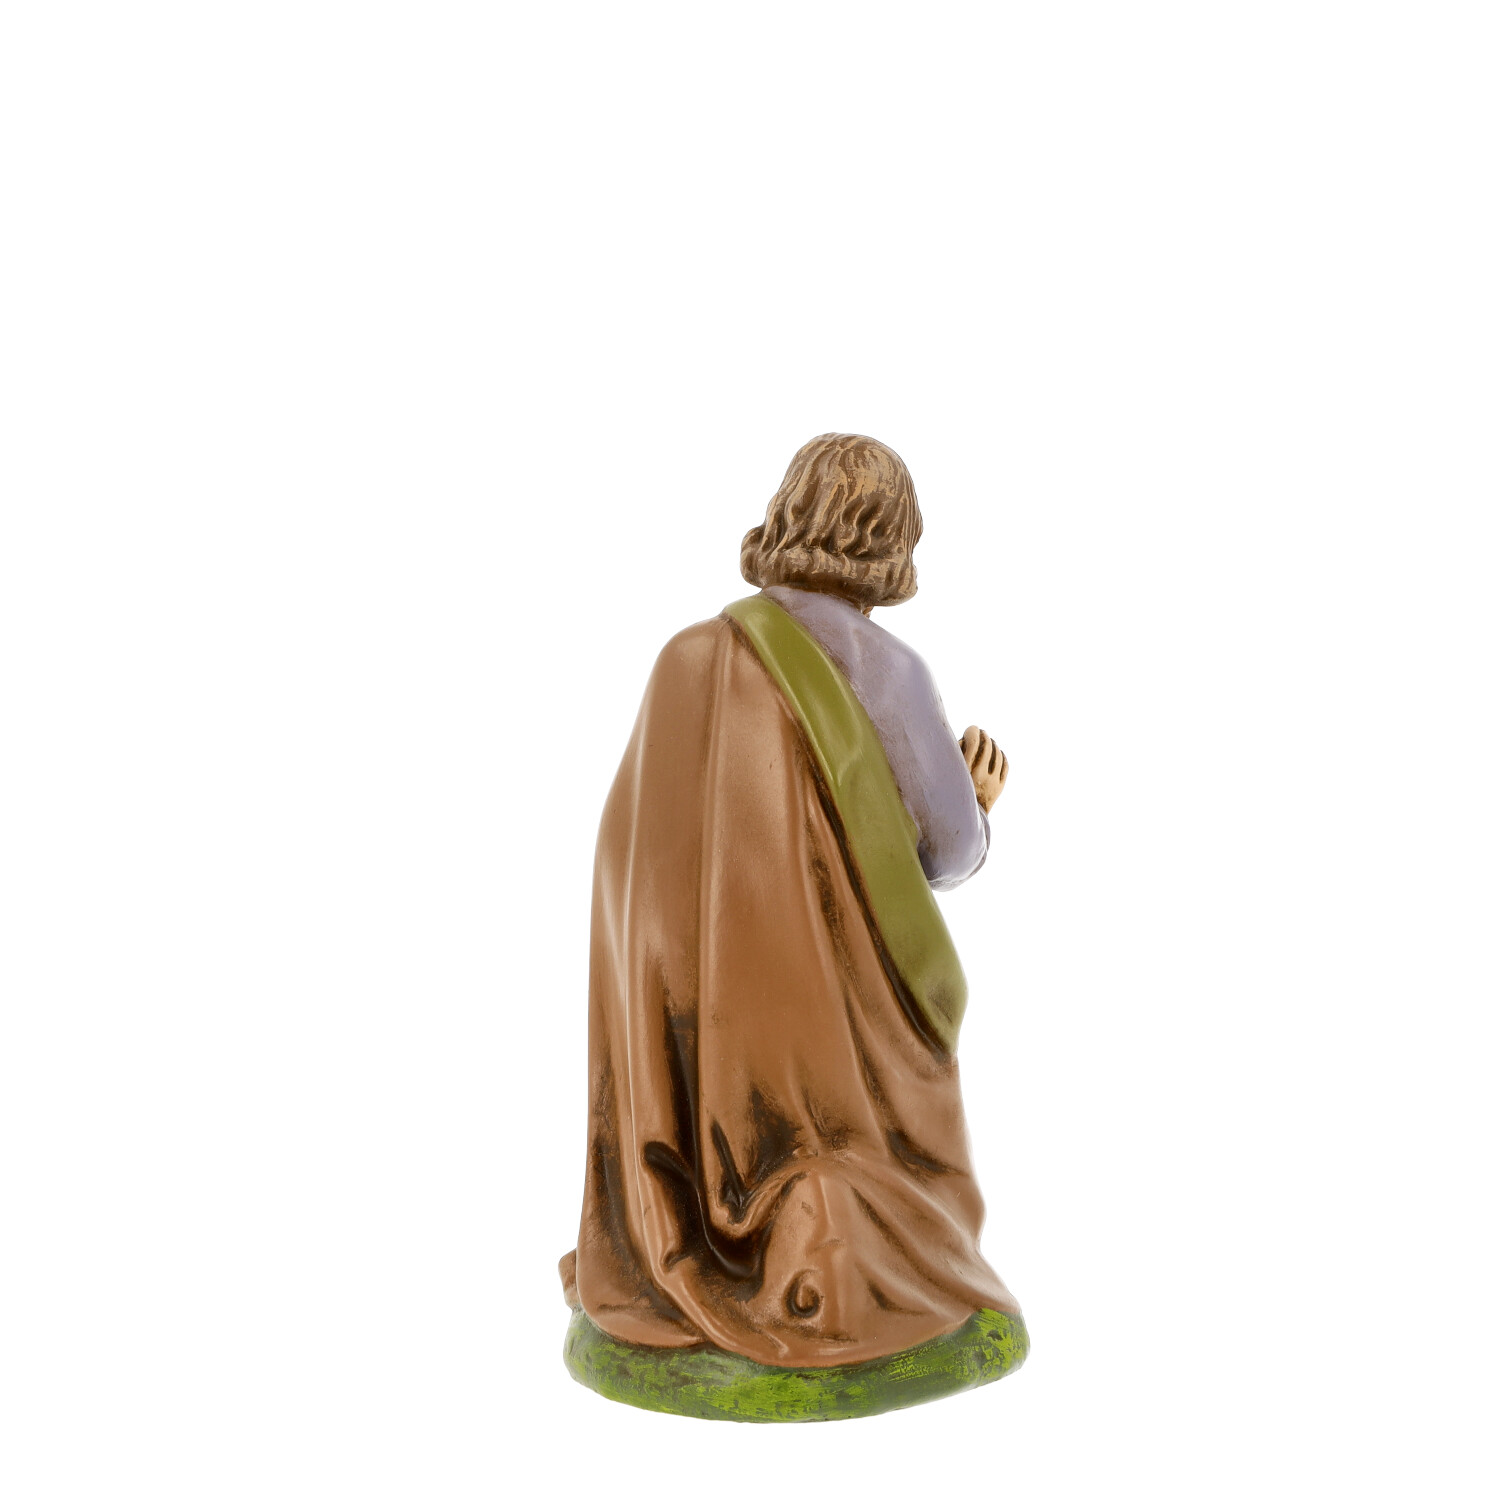 Kneeling Joseph - Marolin Nativity figure - made in Germany